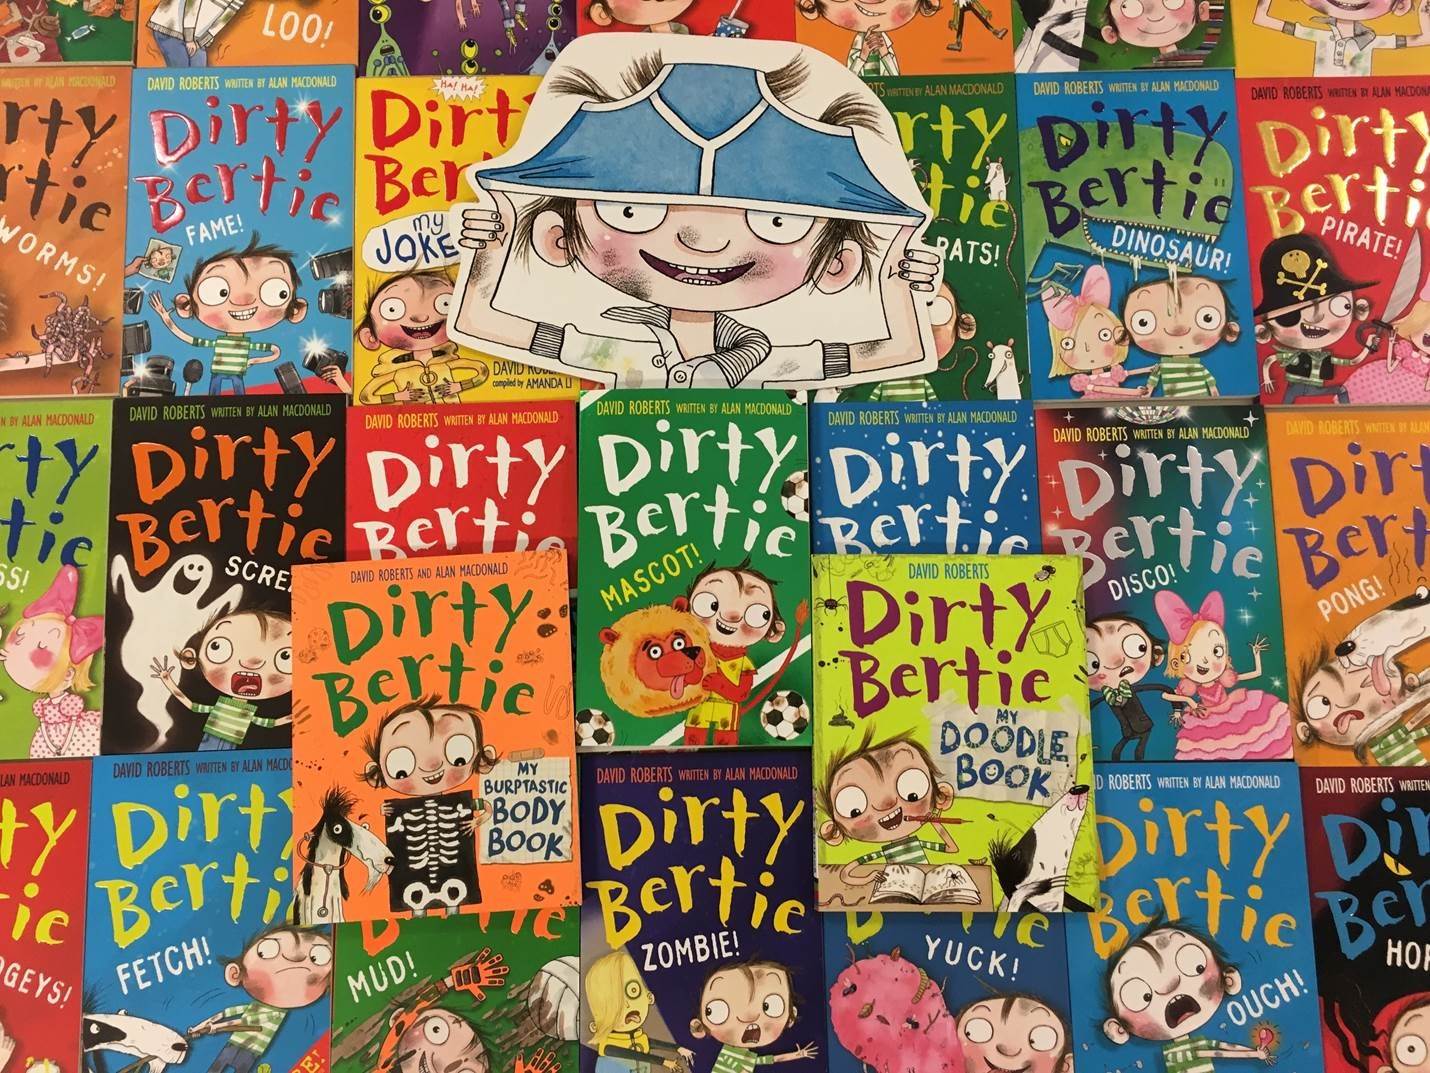 Dirty Bertie books